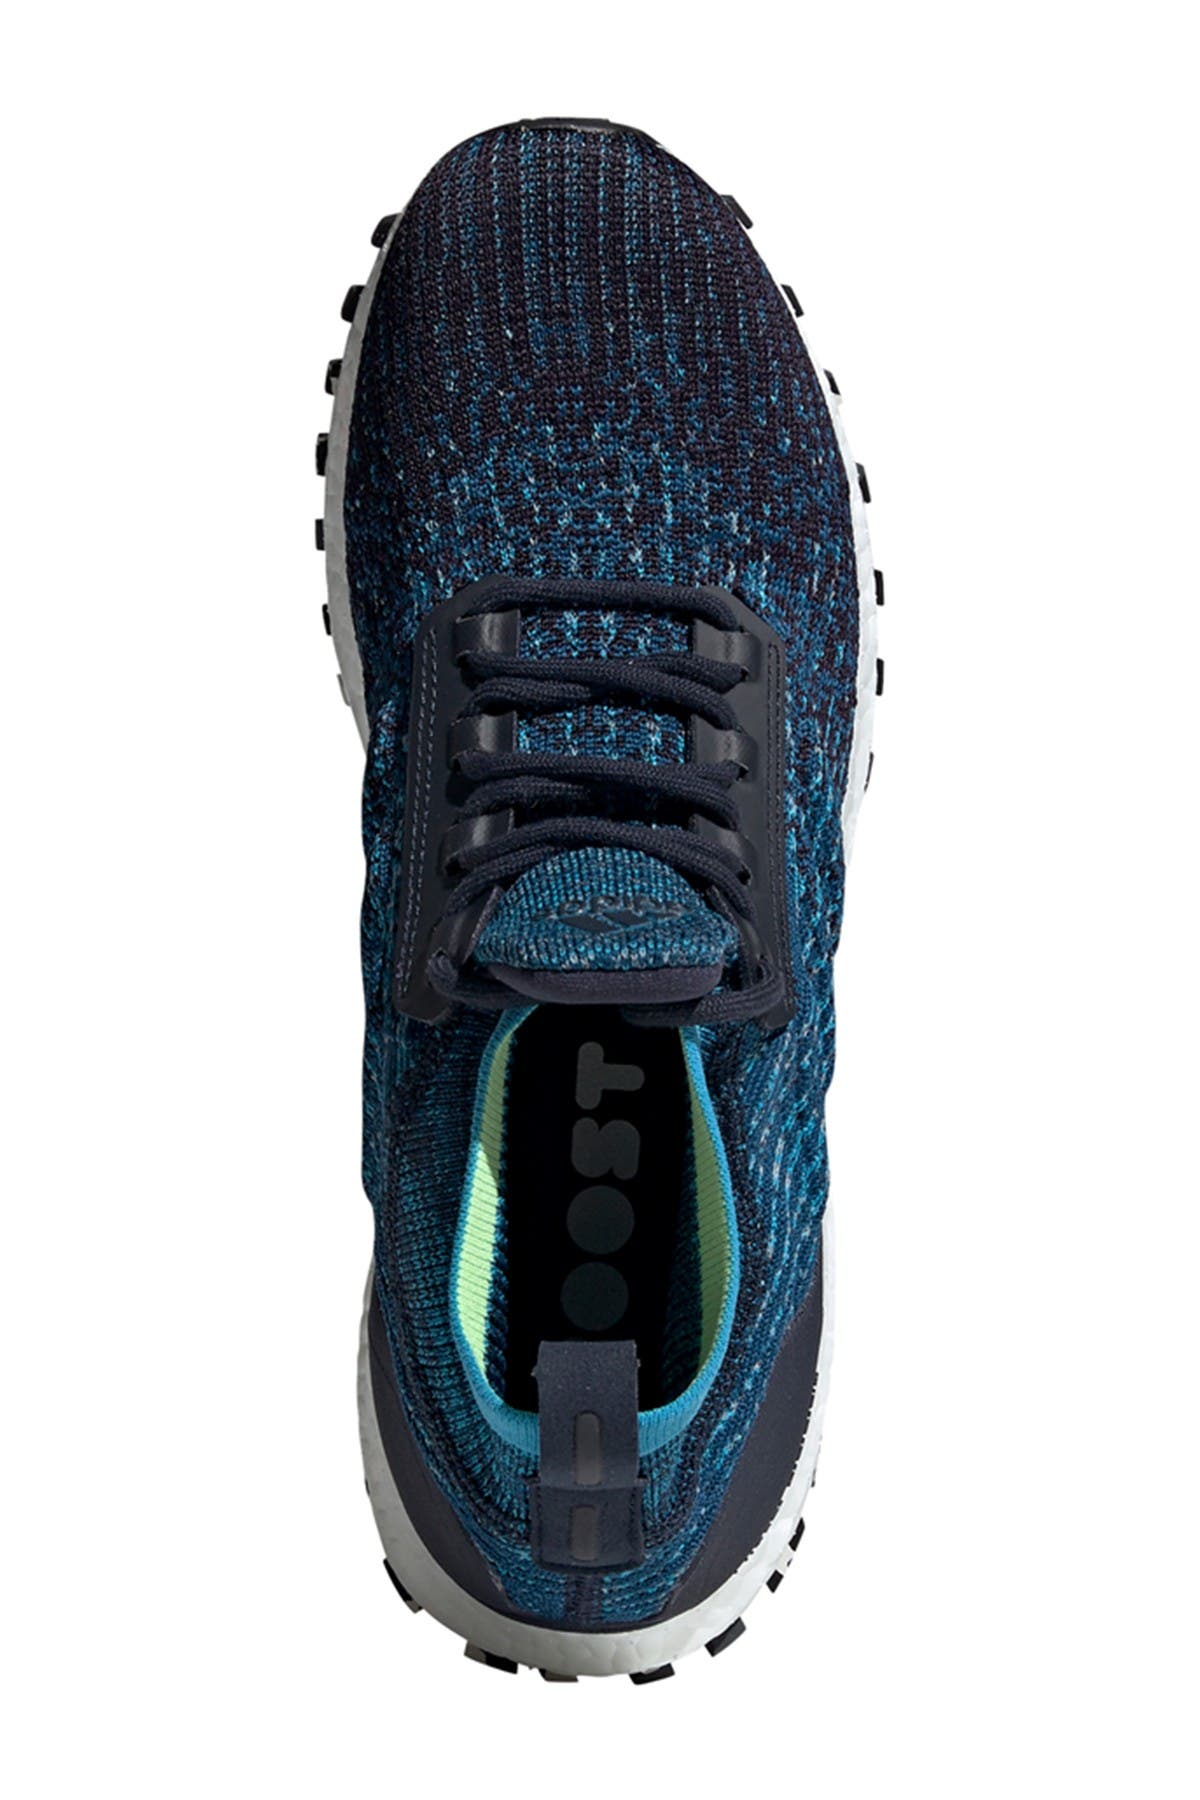 adidas ultraboost all terrain water resistant sneaker